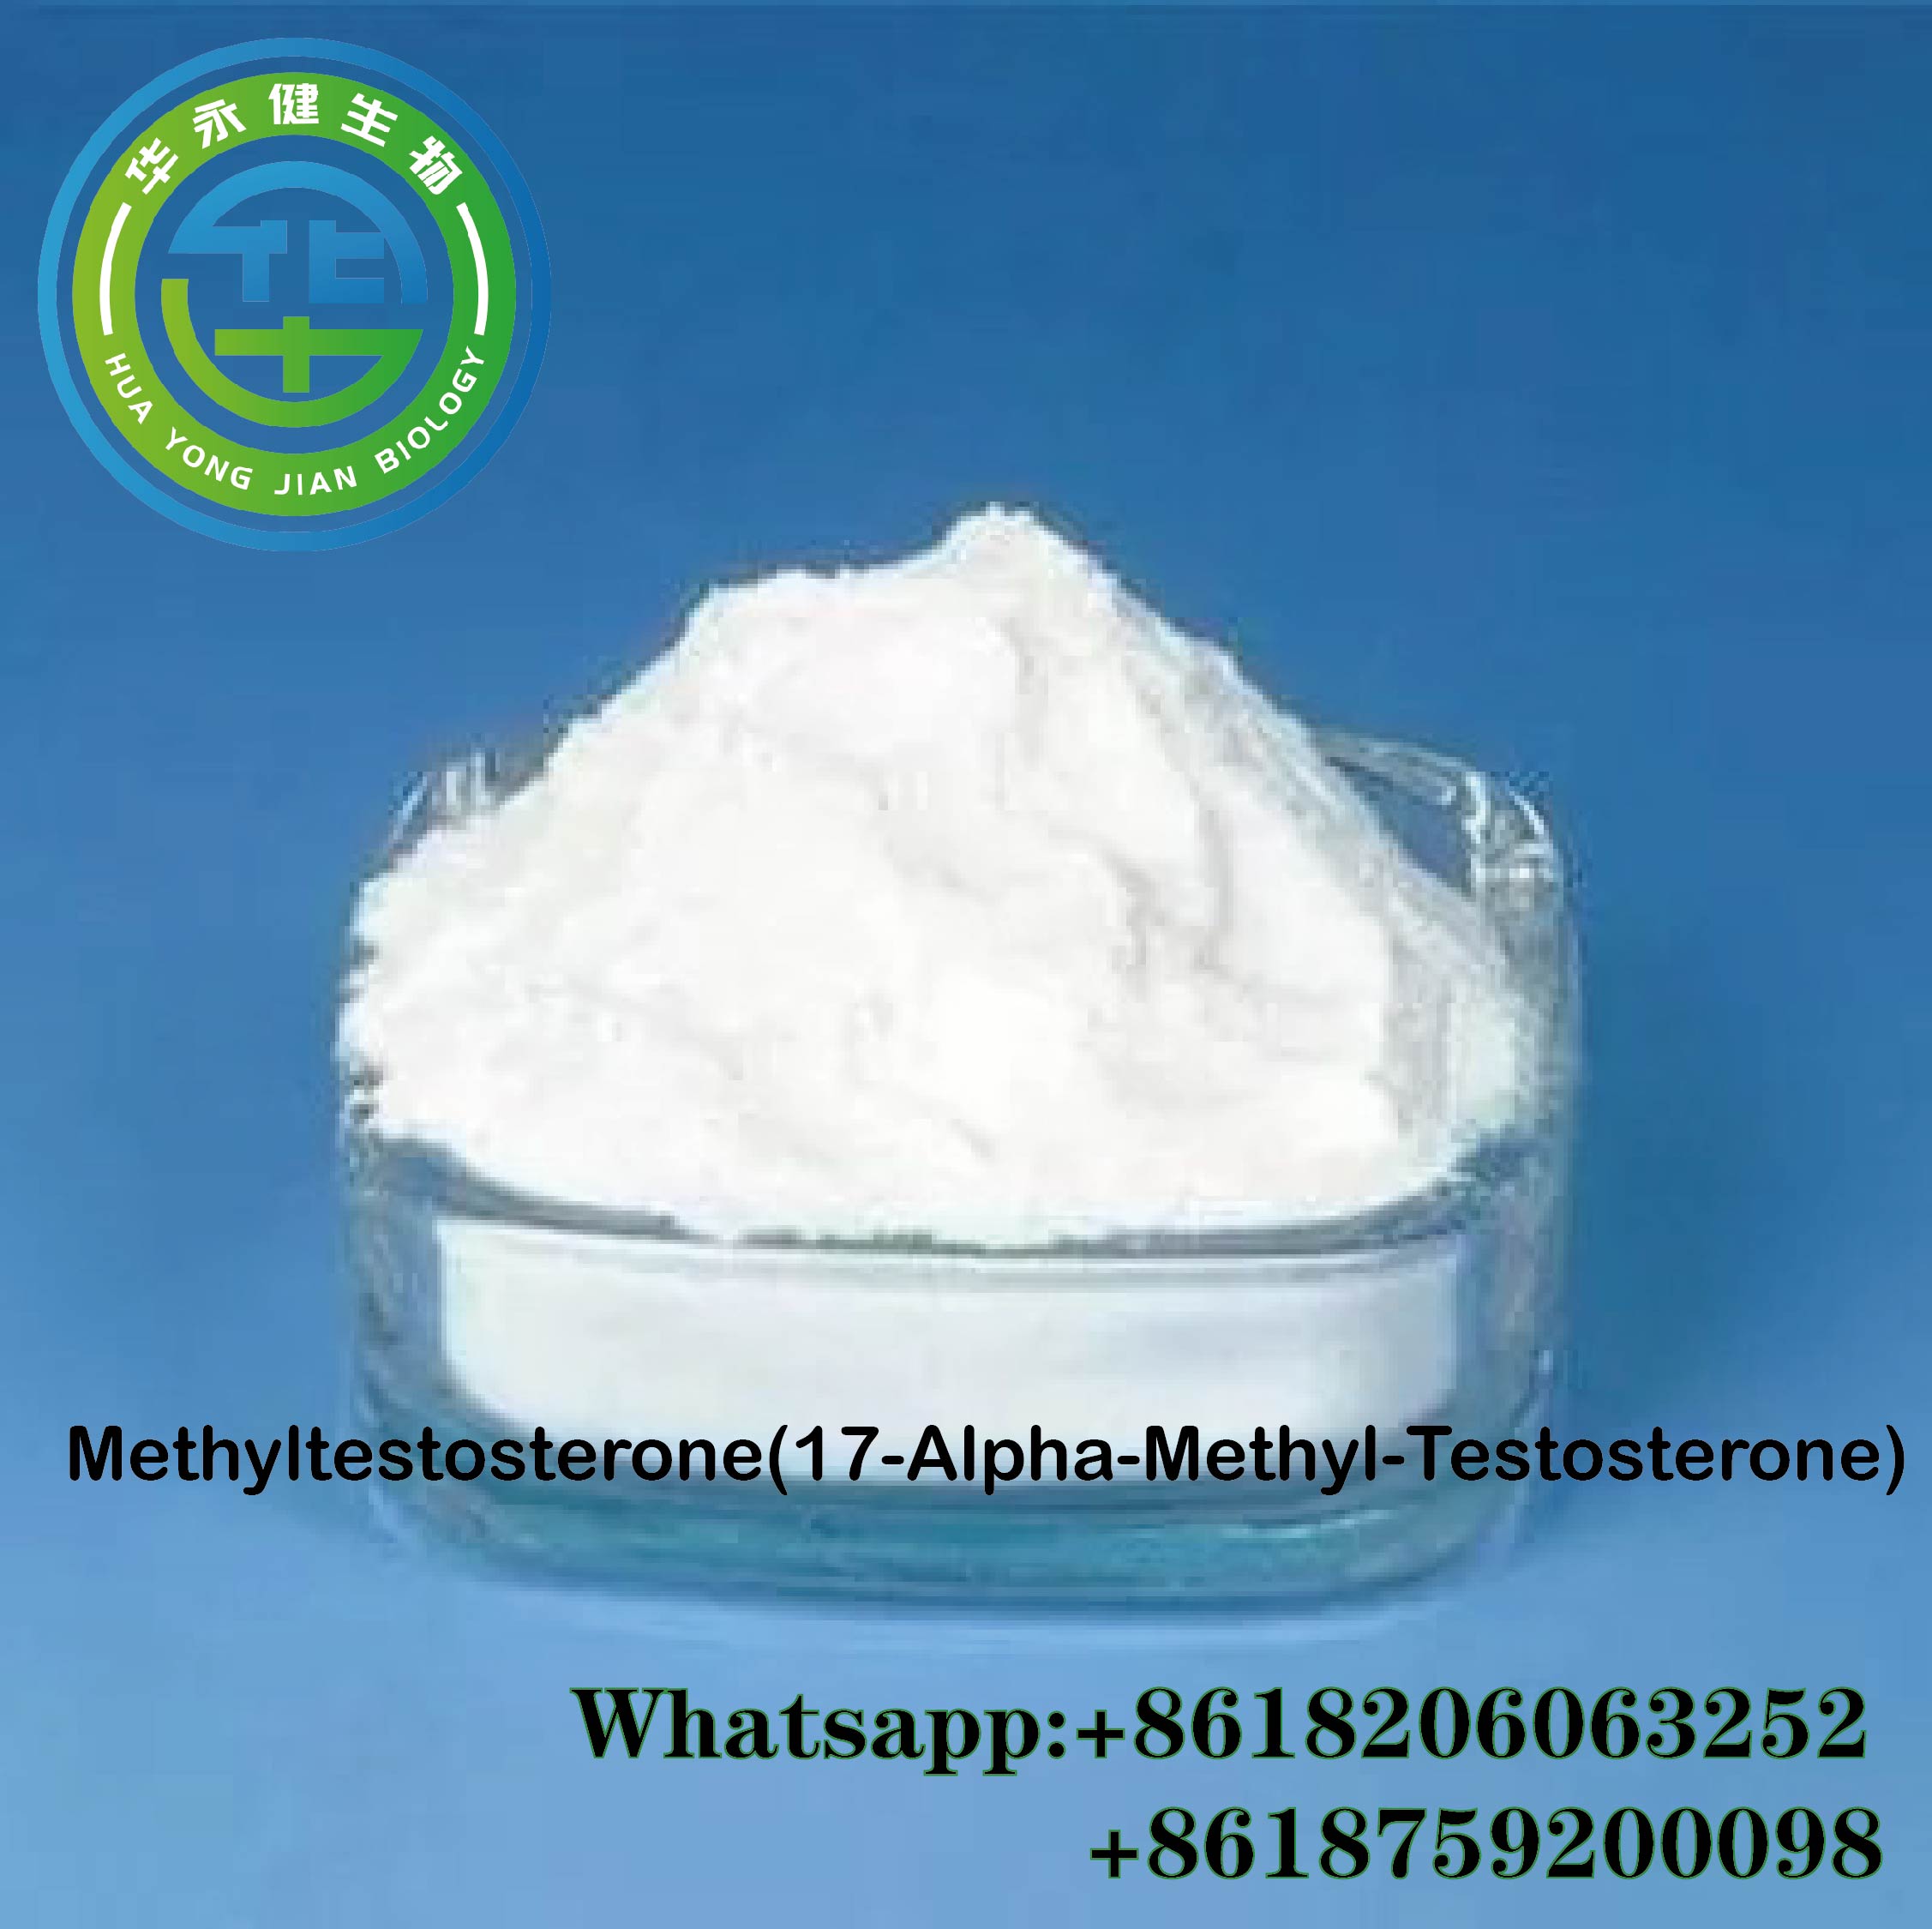 99% Purity Methyltestosterone/ 17-Methyltest Testosterone Powder For Losing Weigh